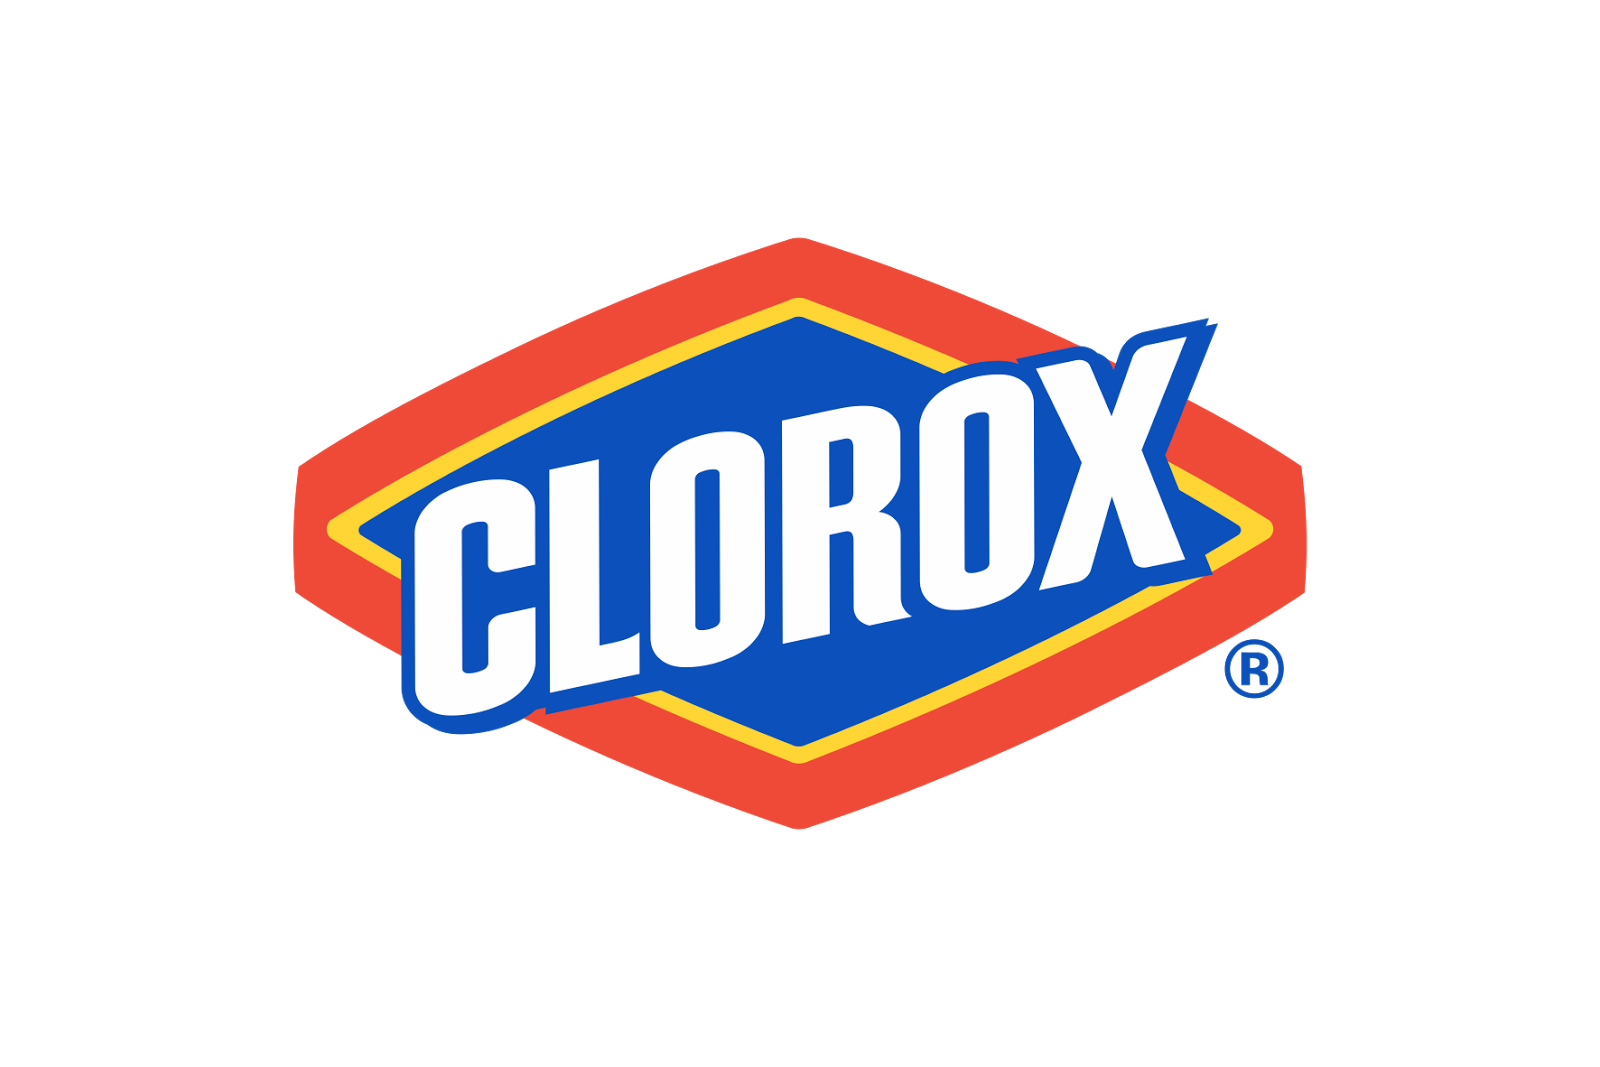 Clorox Logo